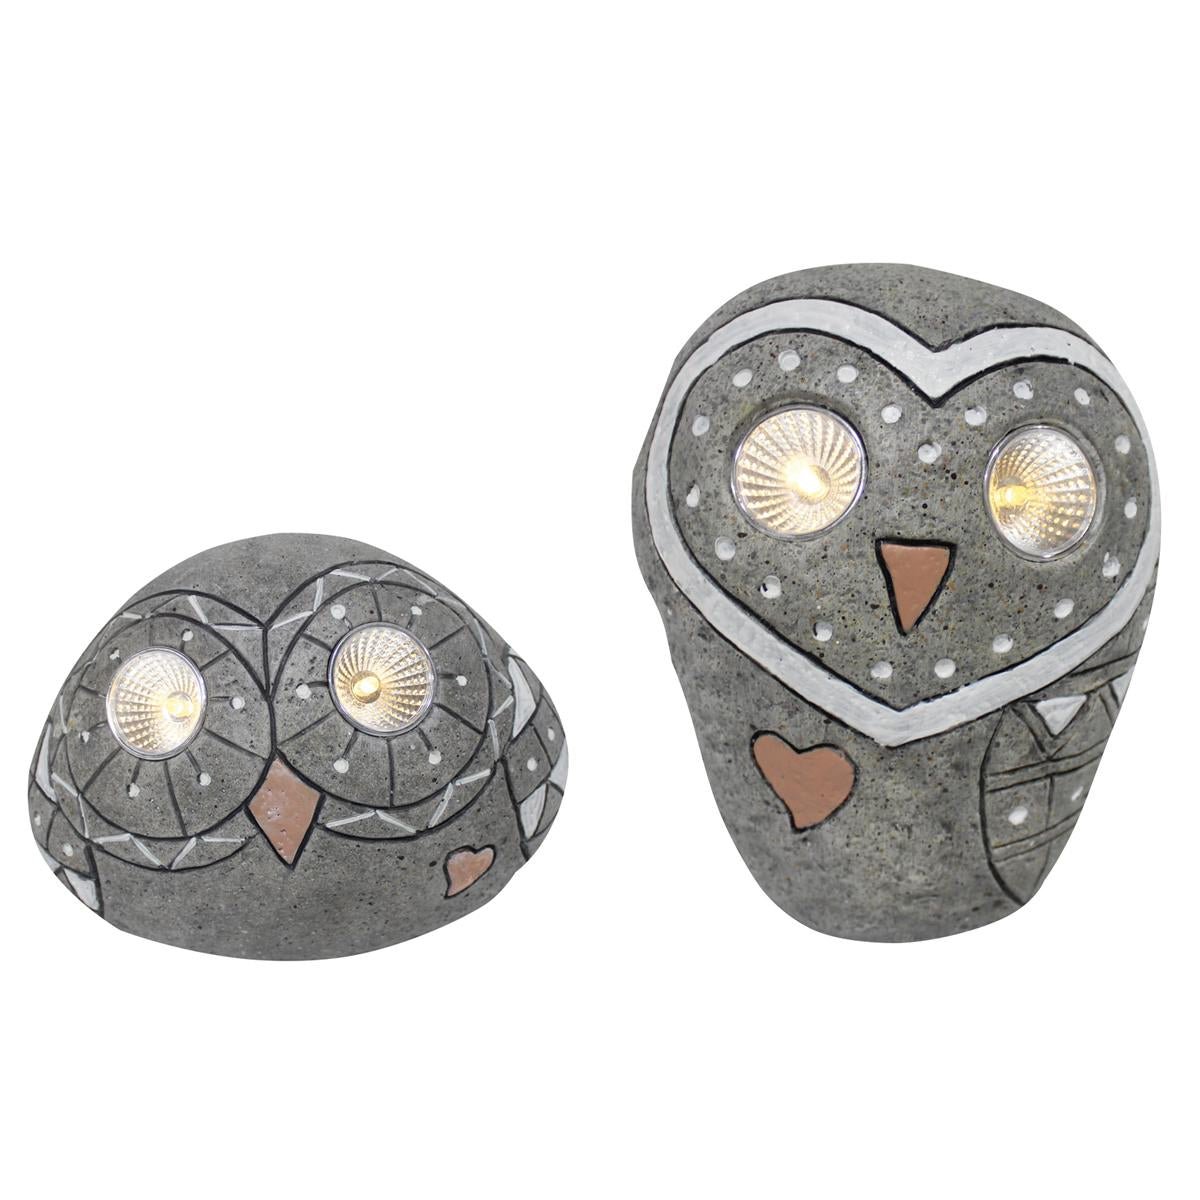 LED decorative stone owl with solar | 2 motifs